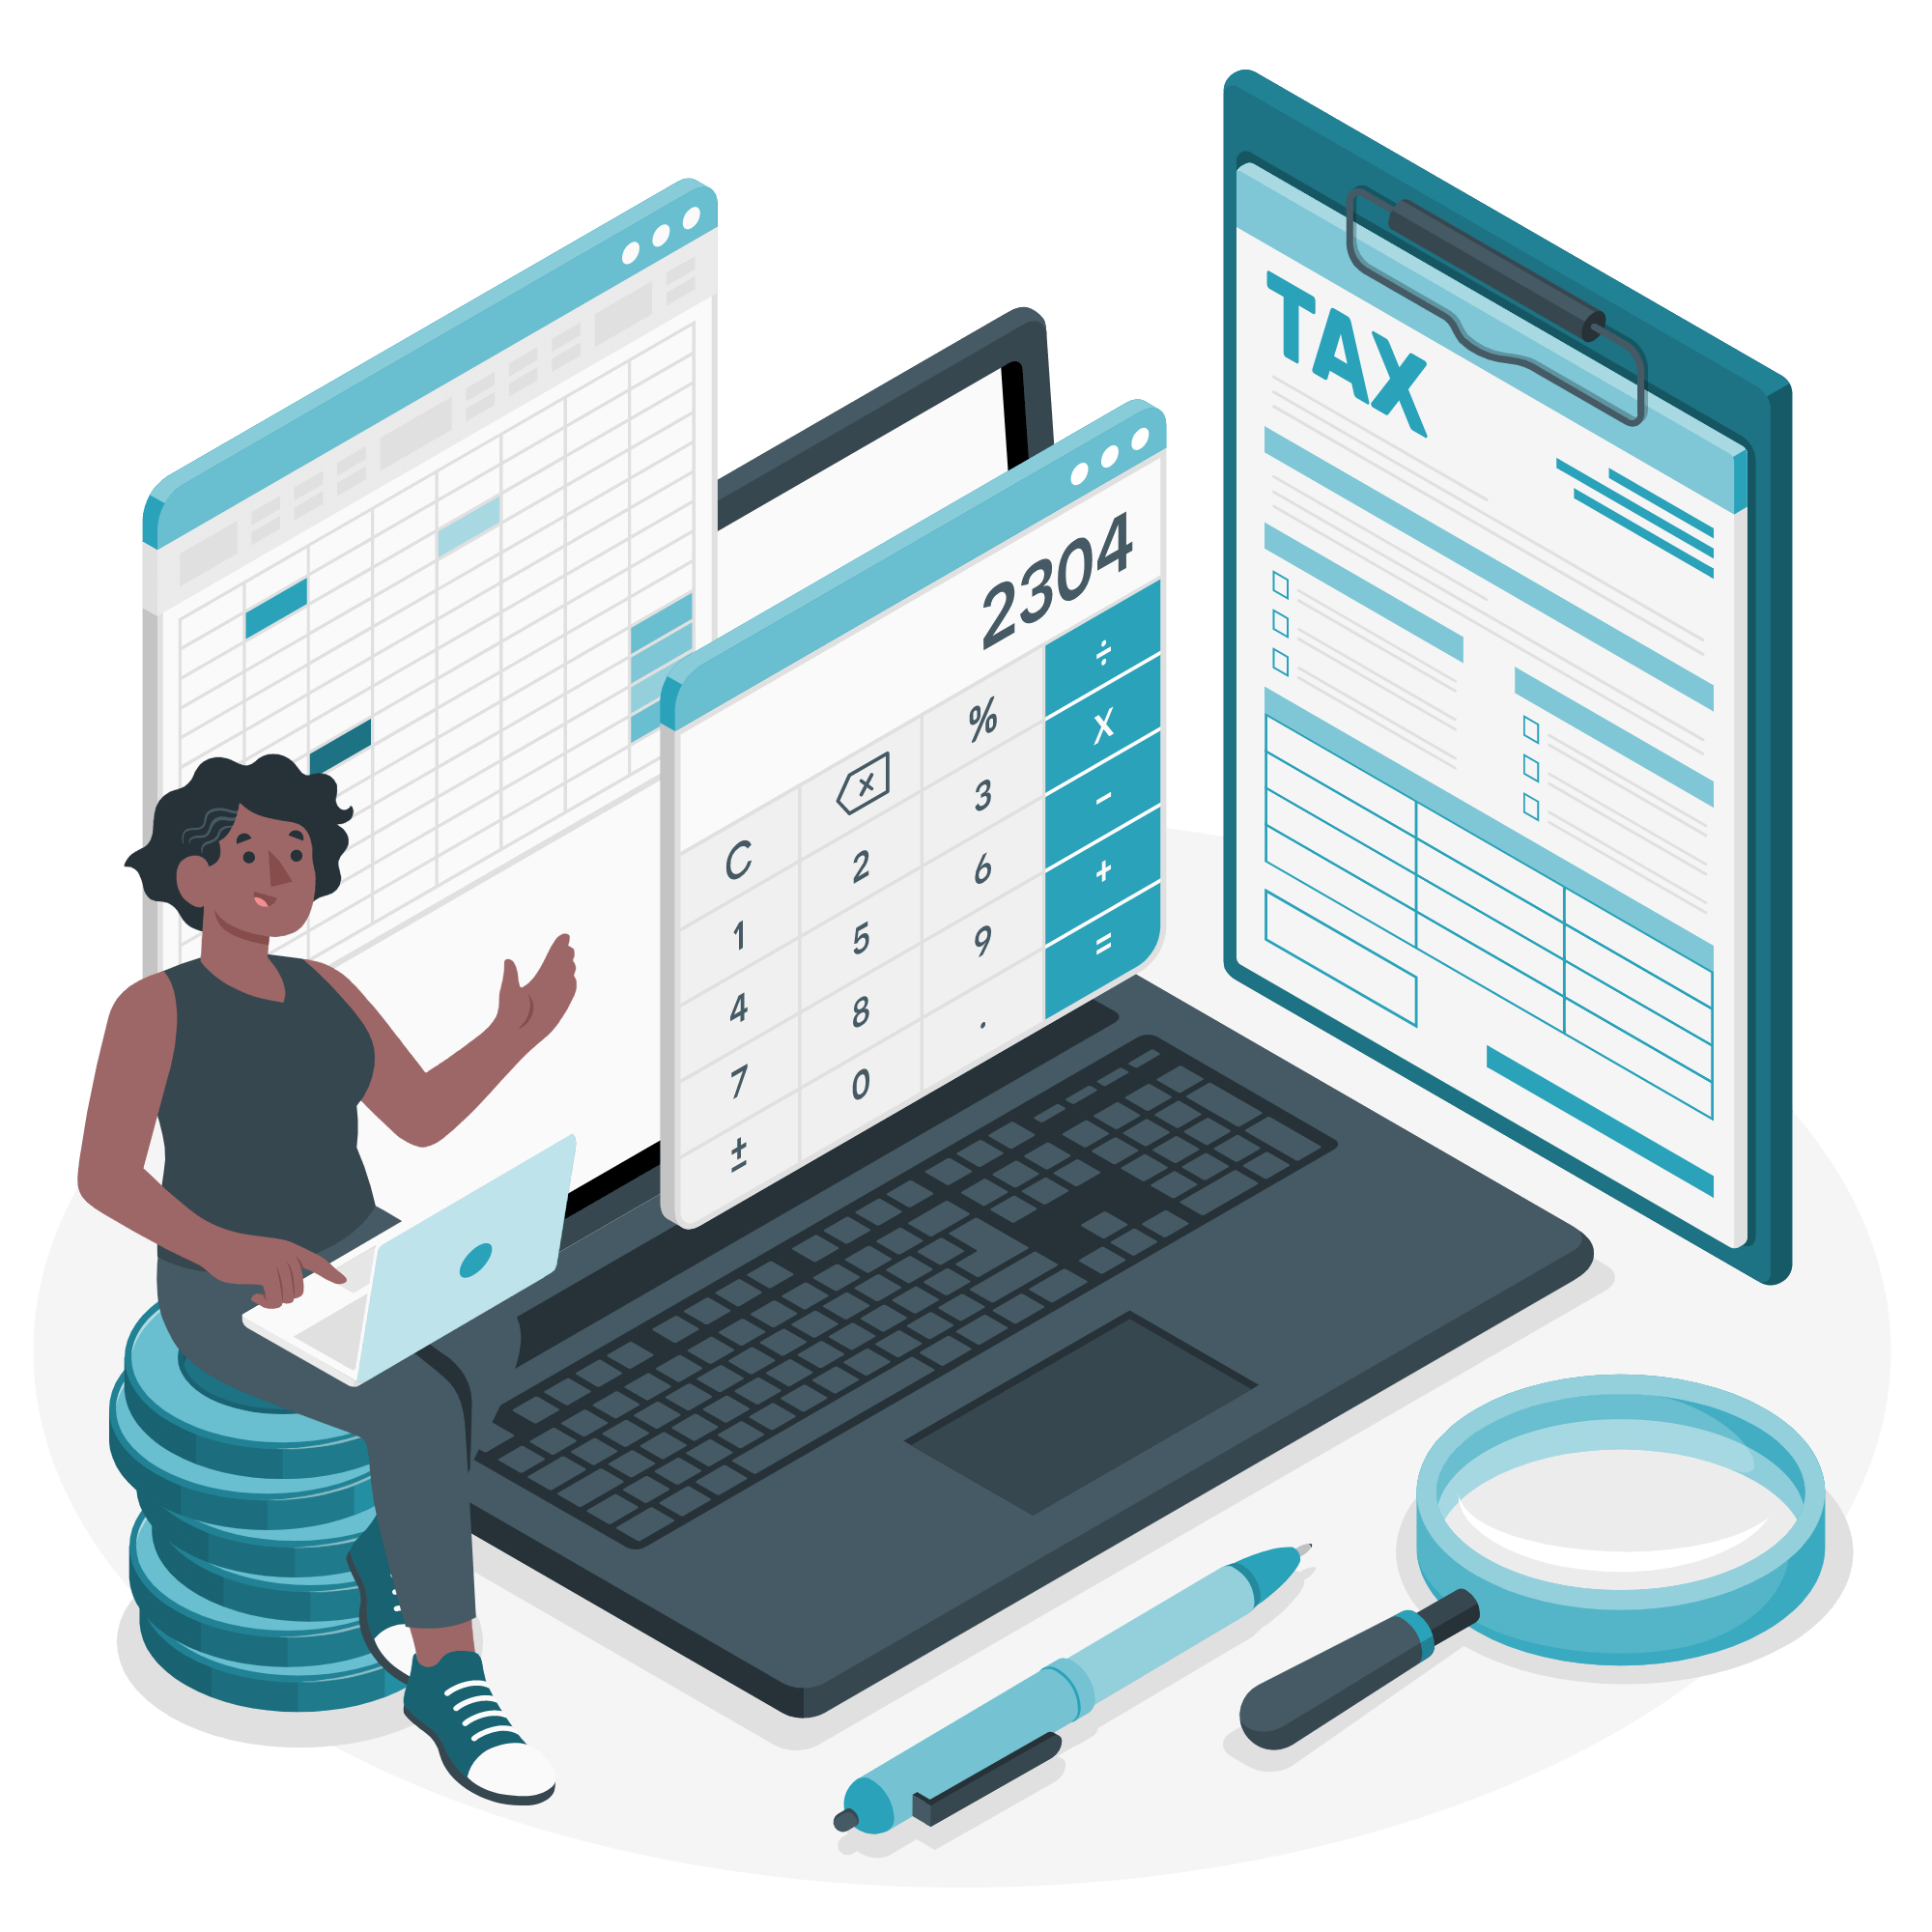 Tax Compliance Advisory cover